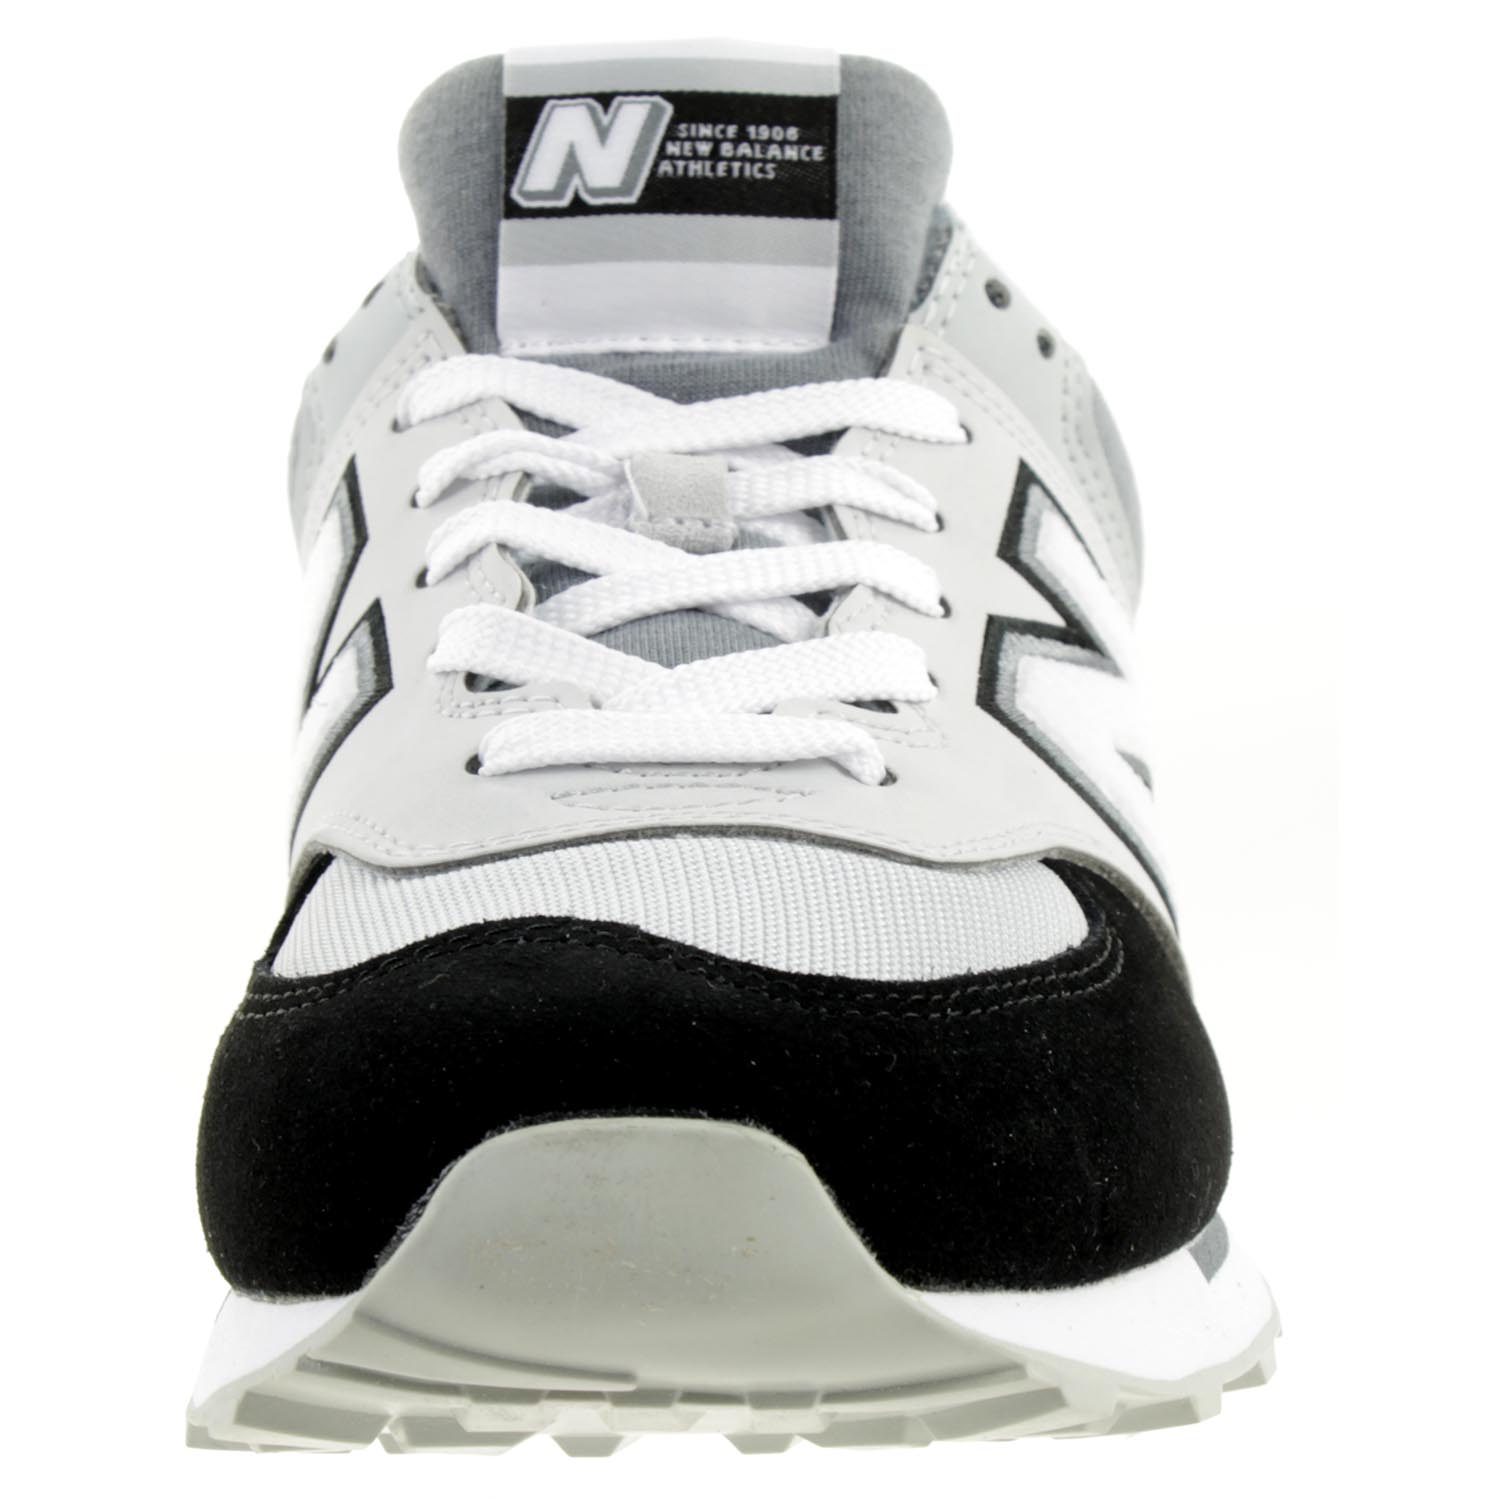 New Balance ML 574 NLC Classic Sneaker Herren Schuhe schwarz grau